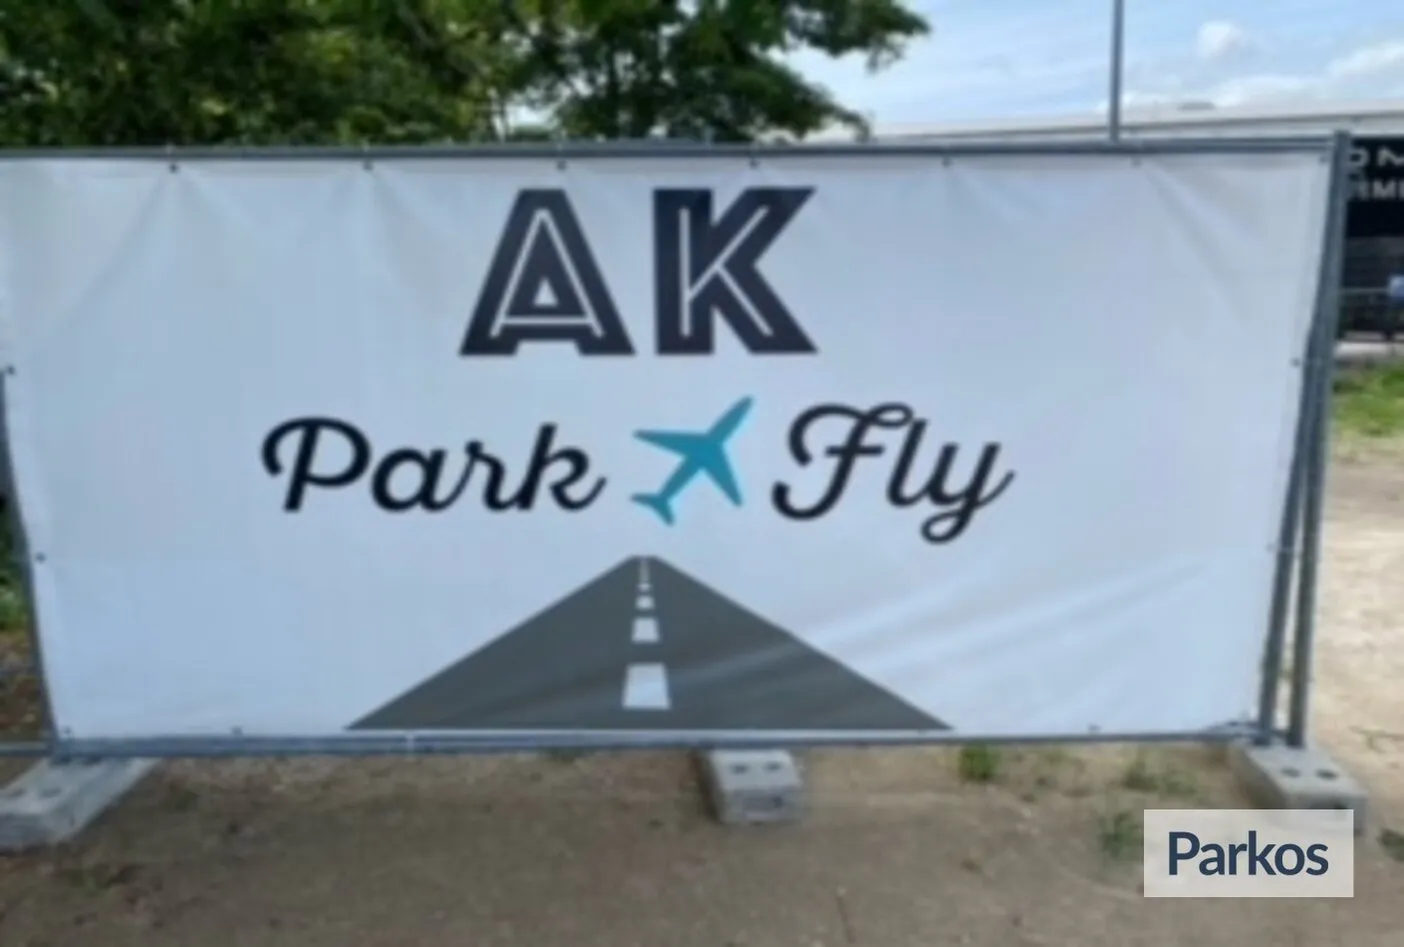 AK Park & Fly - Parkeren Vliegveld Hamburg - picture 1